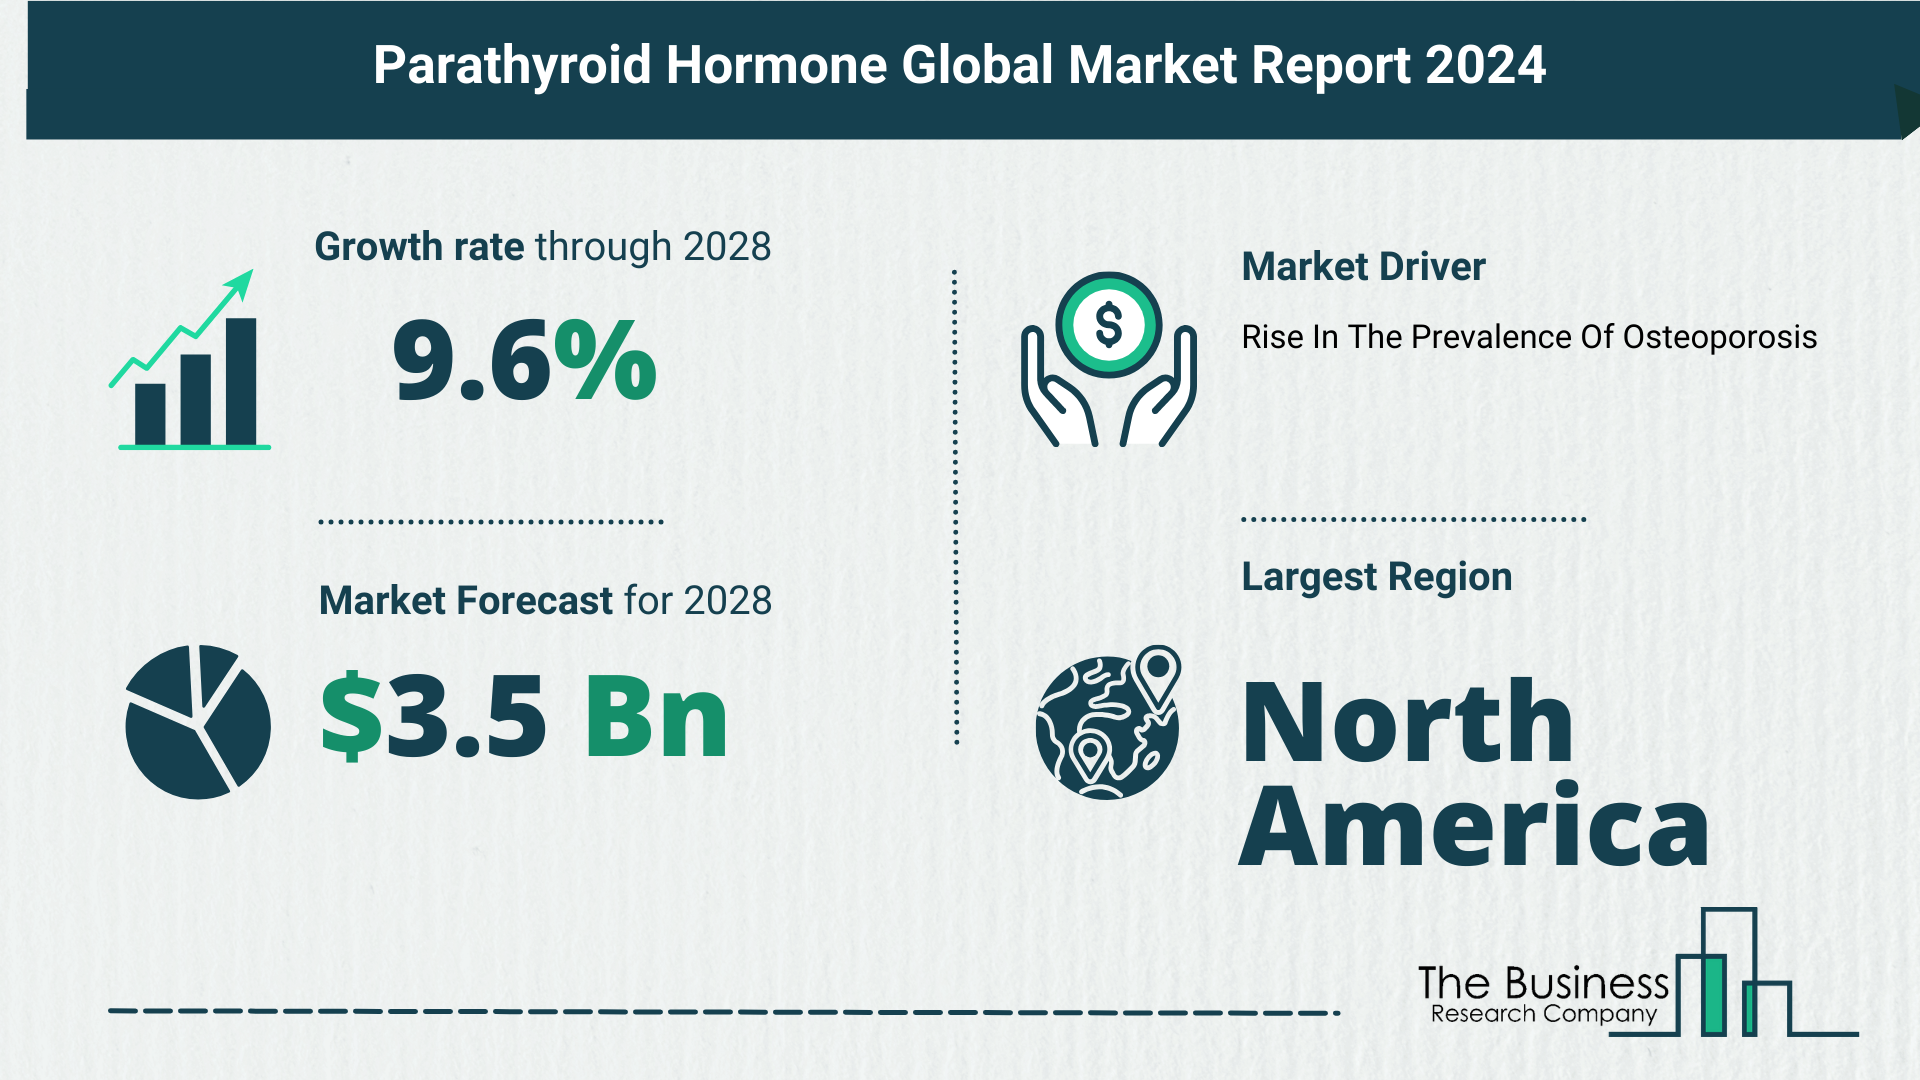 Global Parathyroid Hormone Market